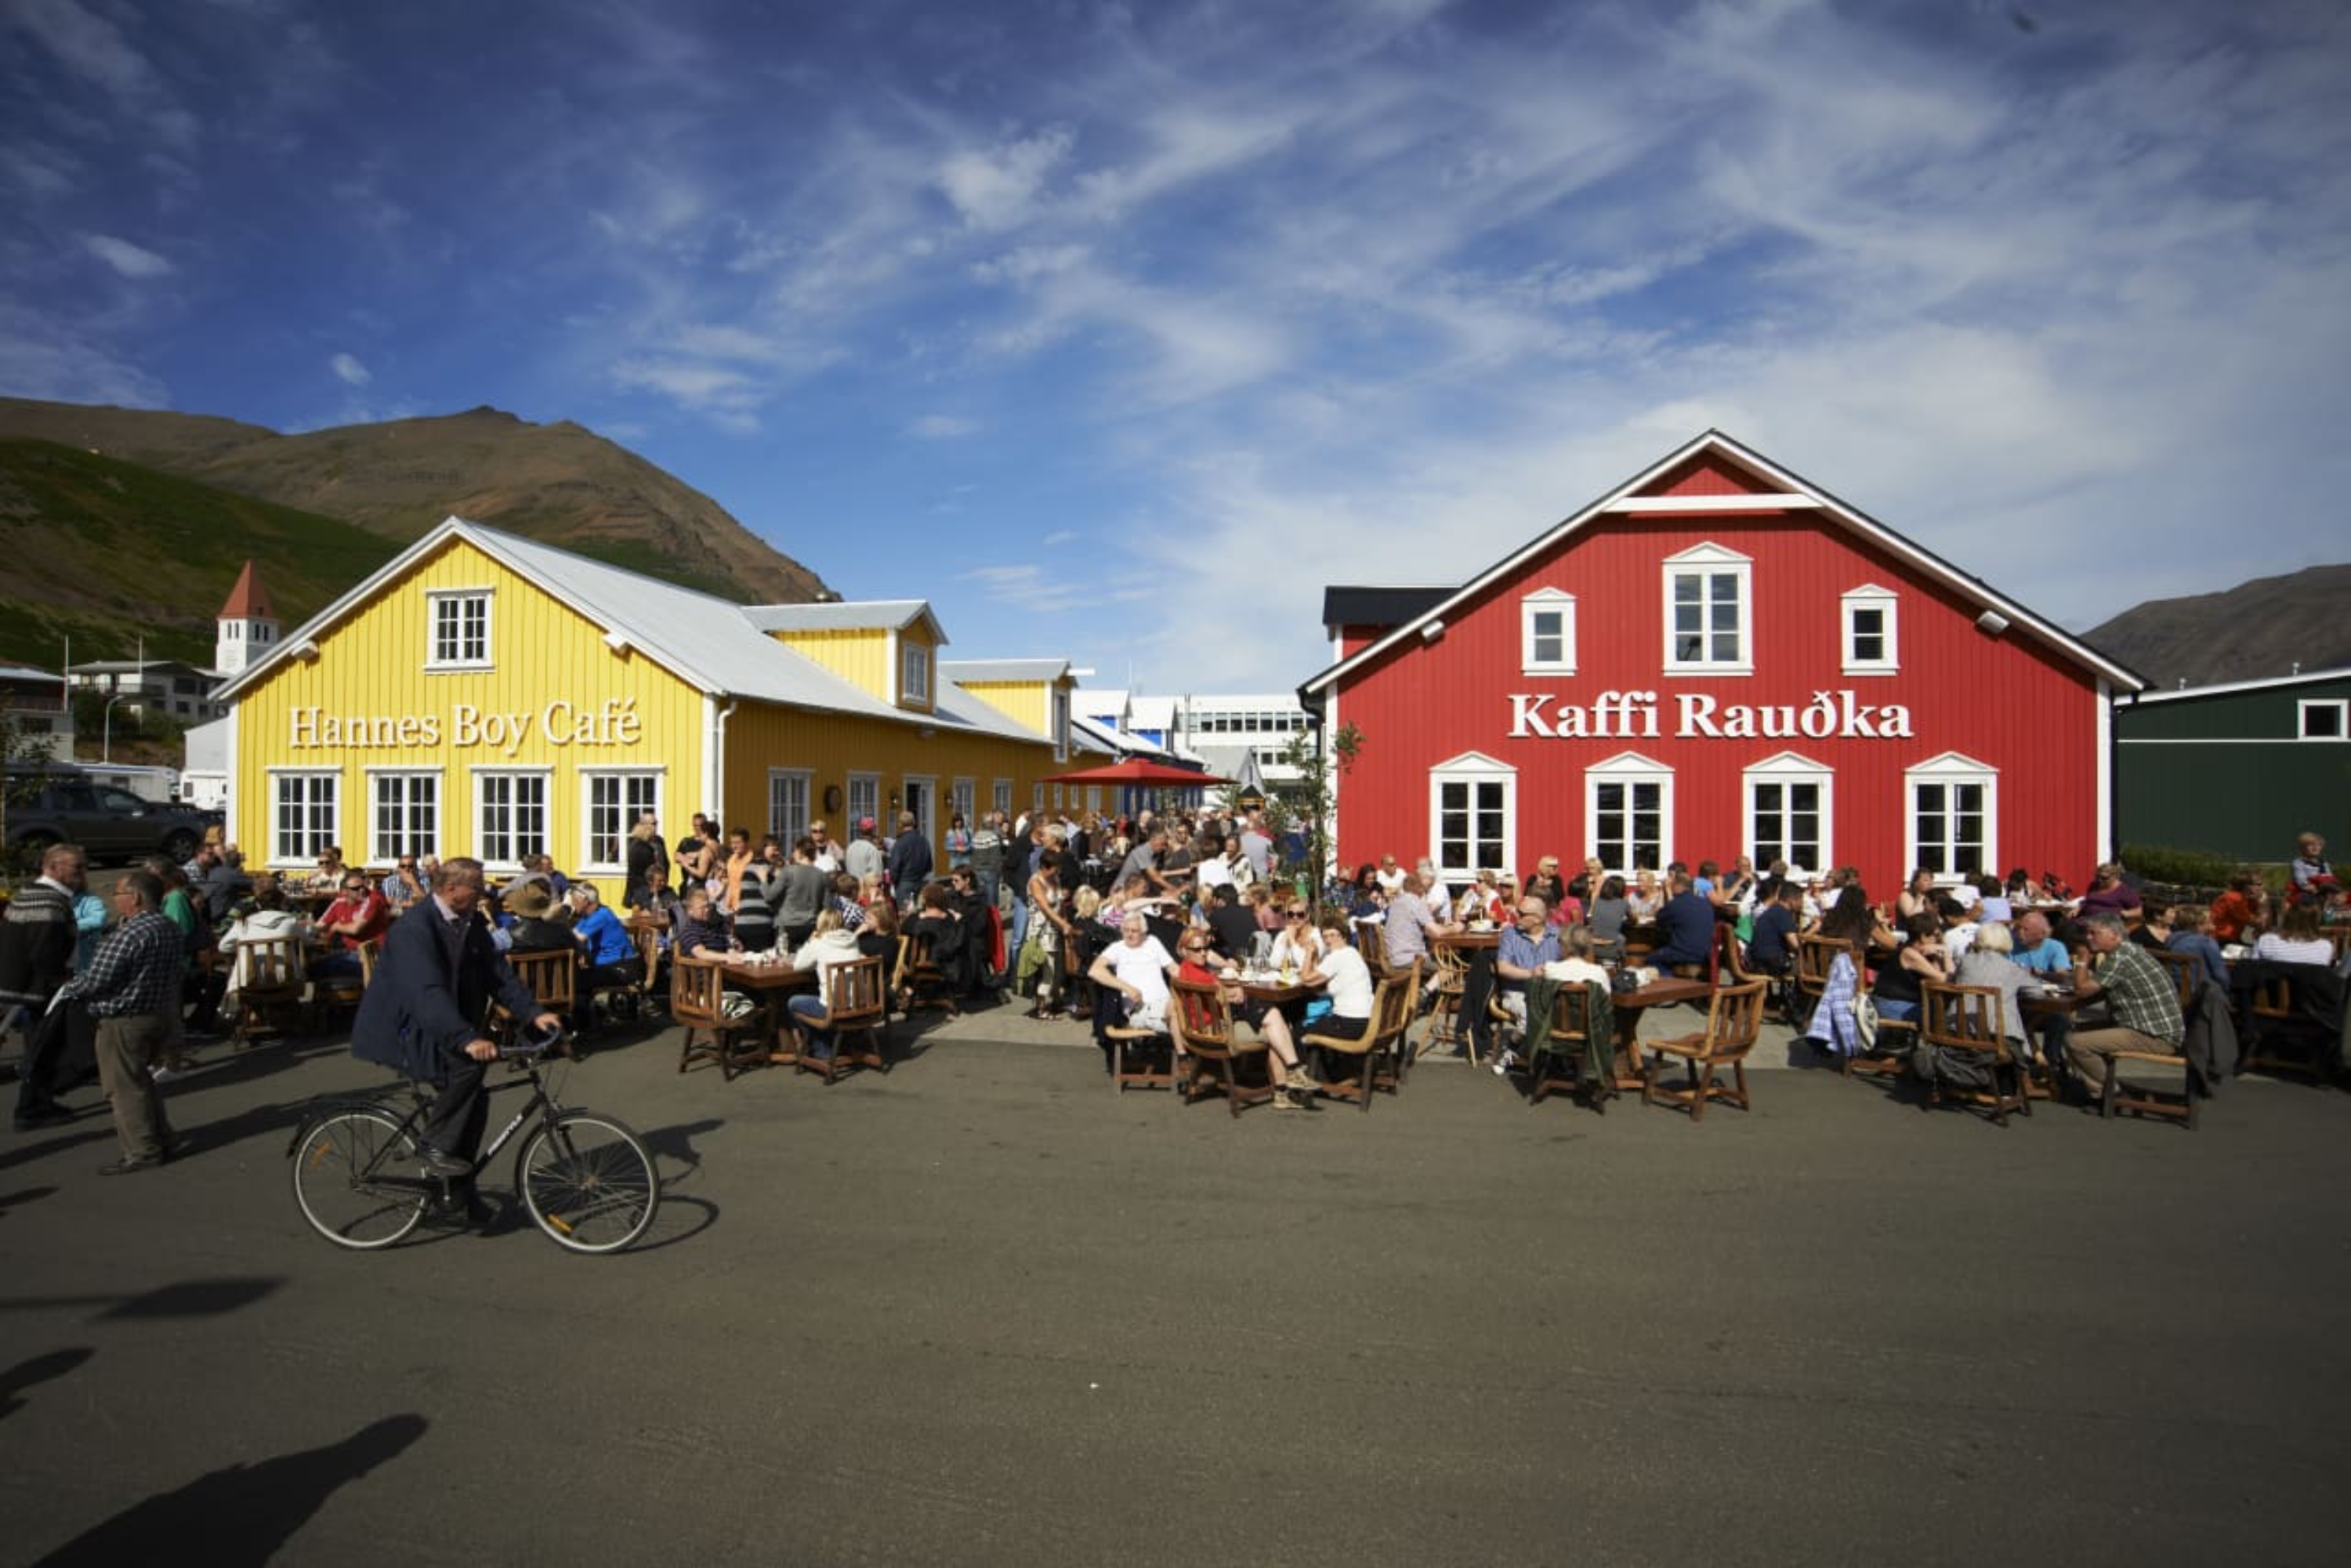 Kaffi Rauðka (Red Cafe) in Reykjavík